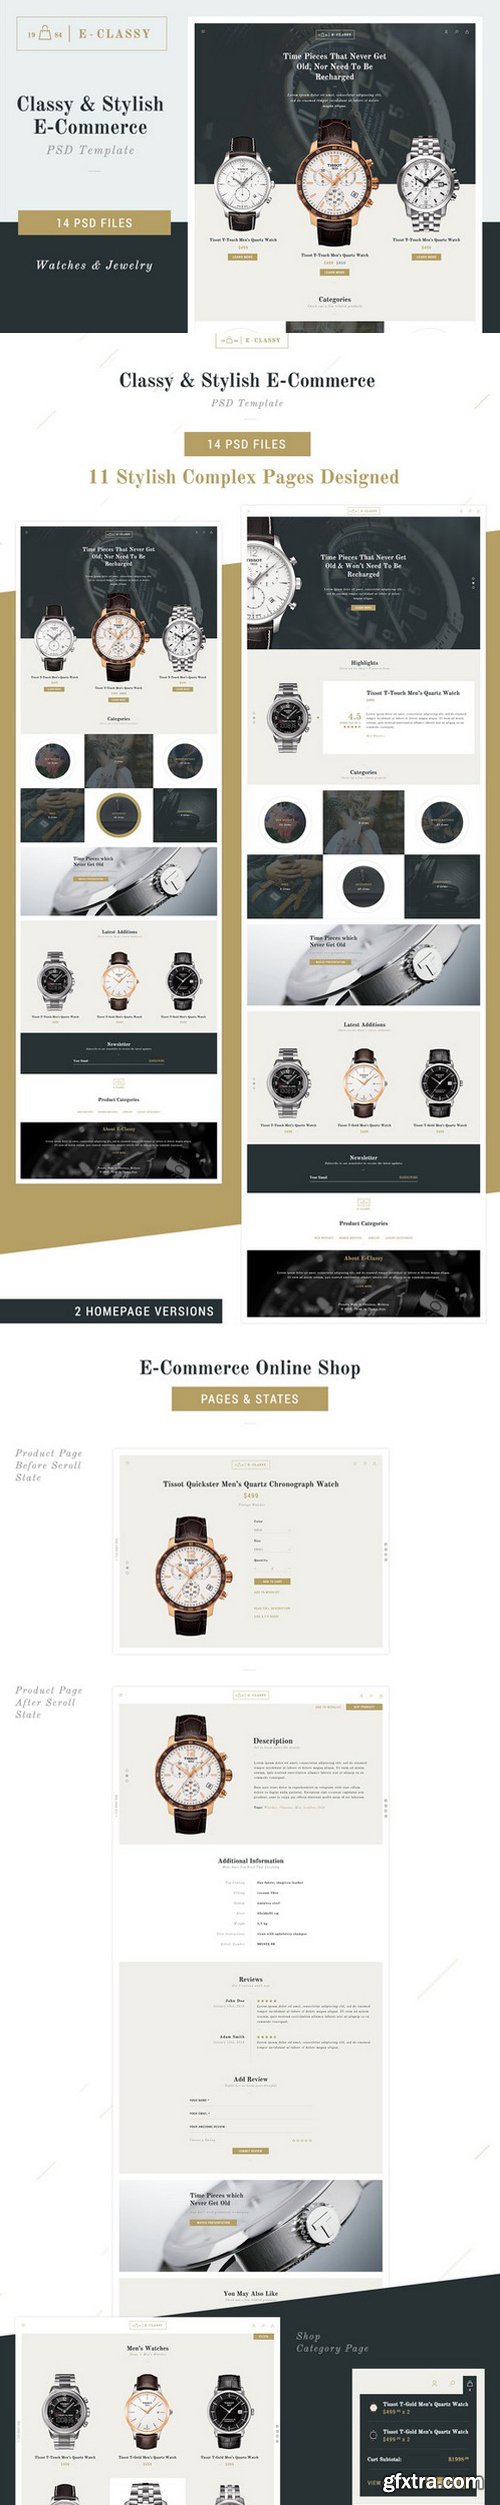 CM - E-Classy - Luxury Shop PSD Template 509198